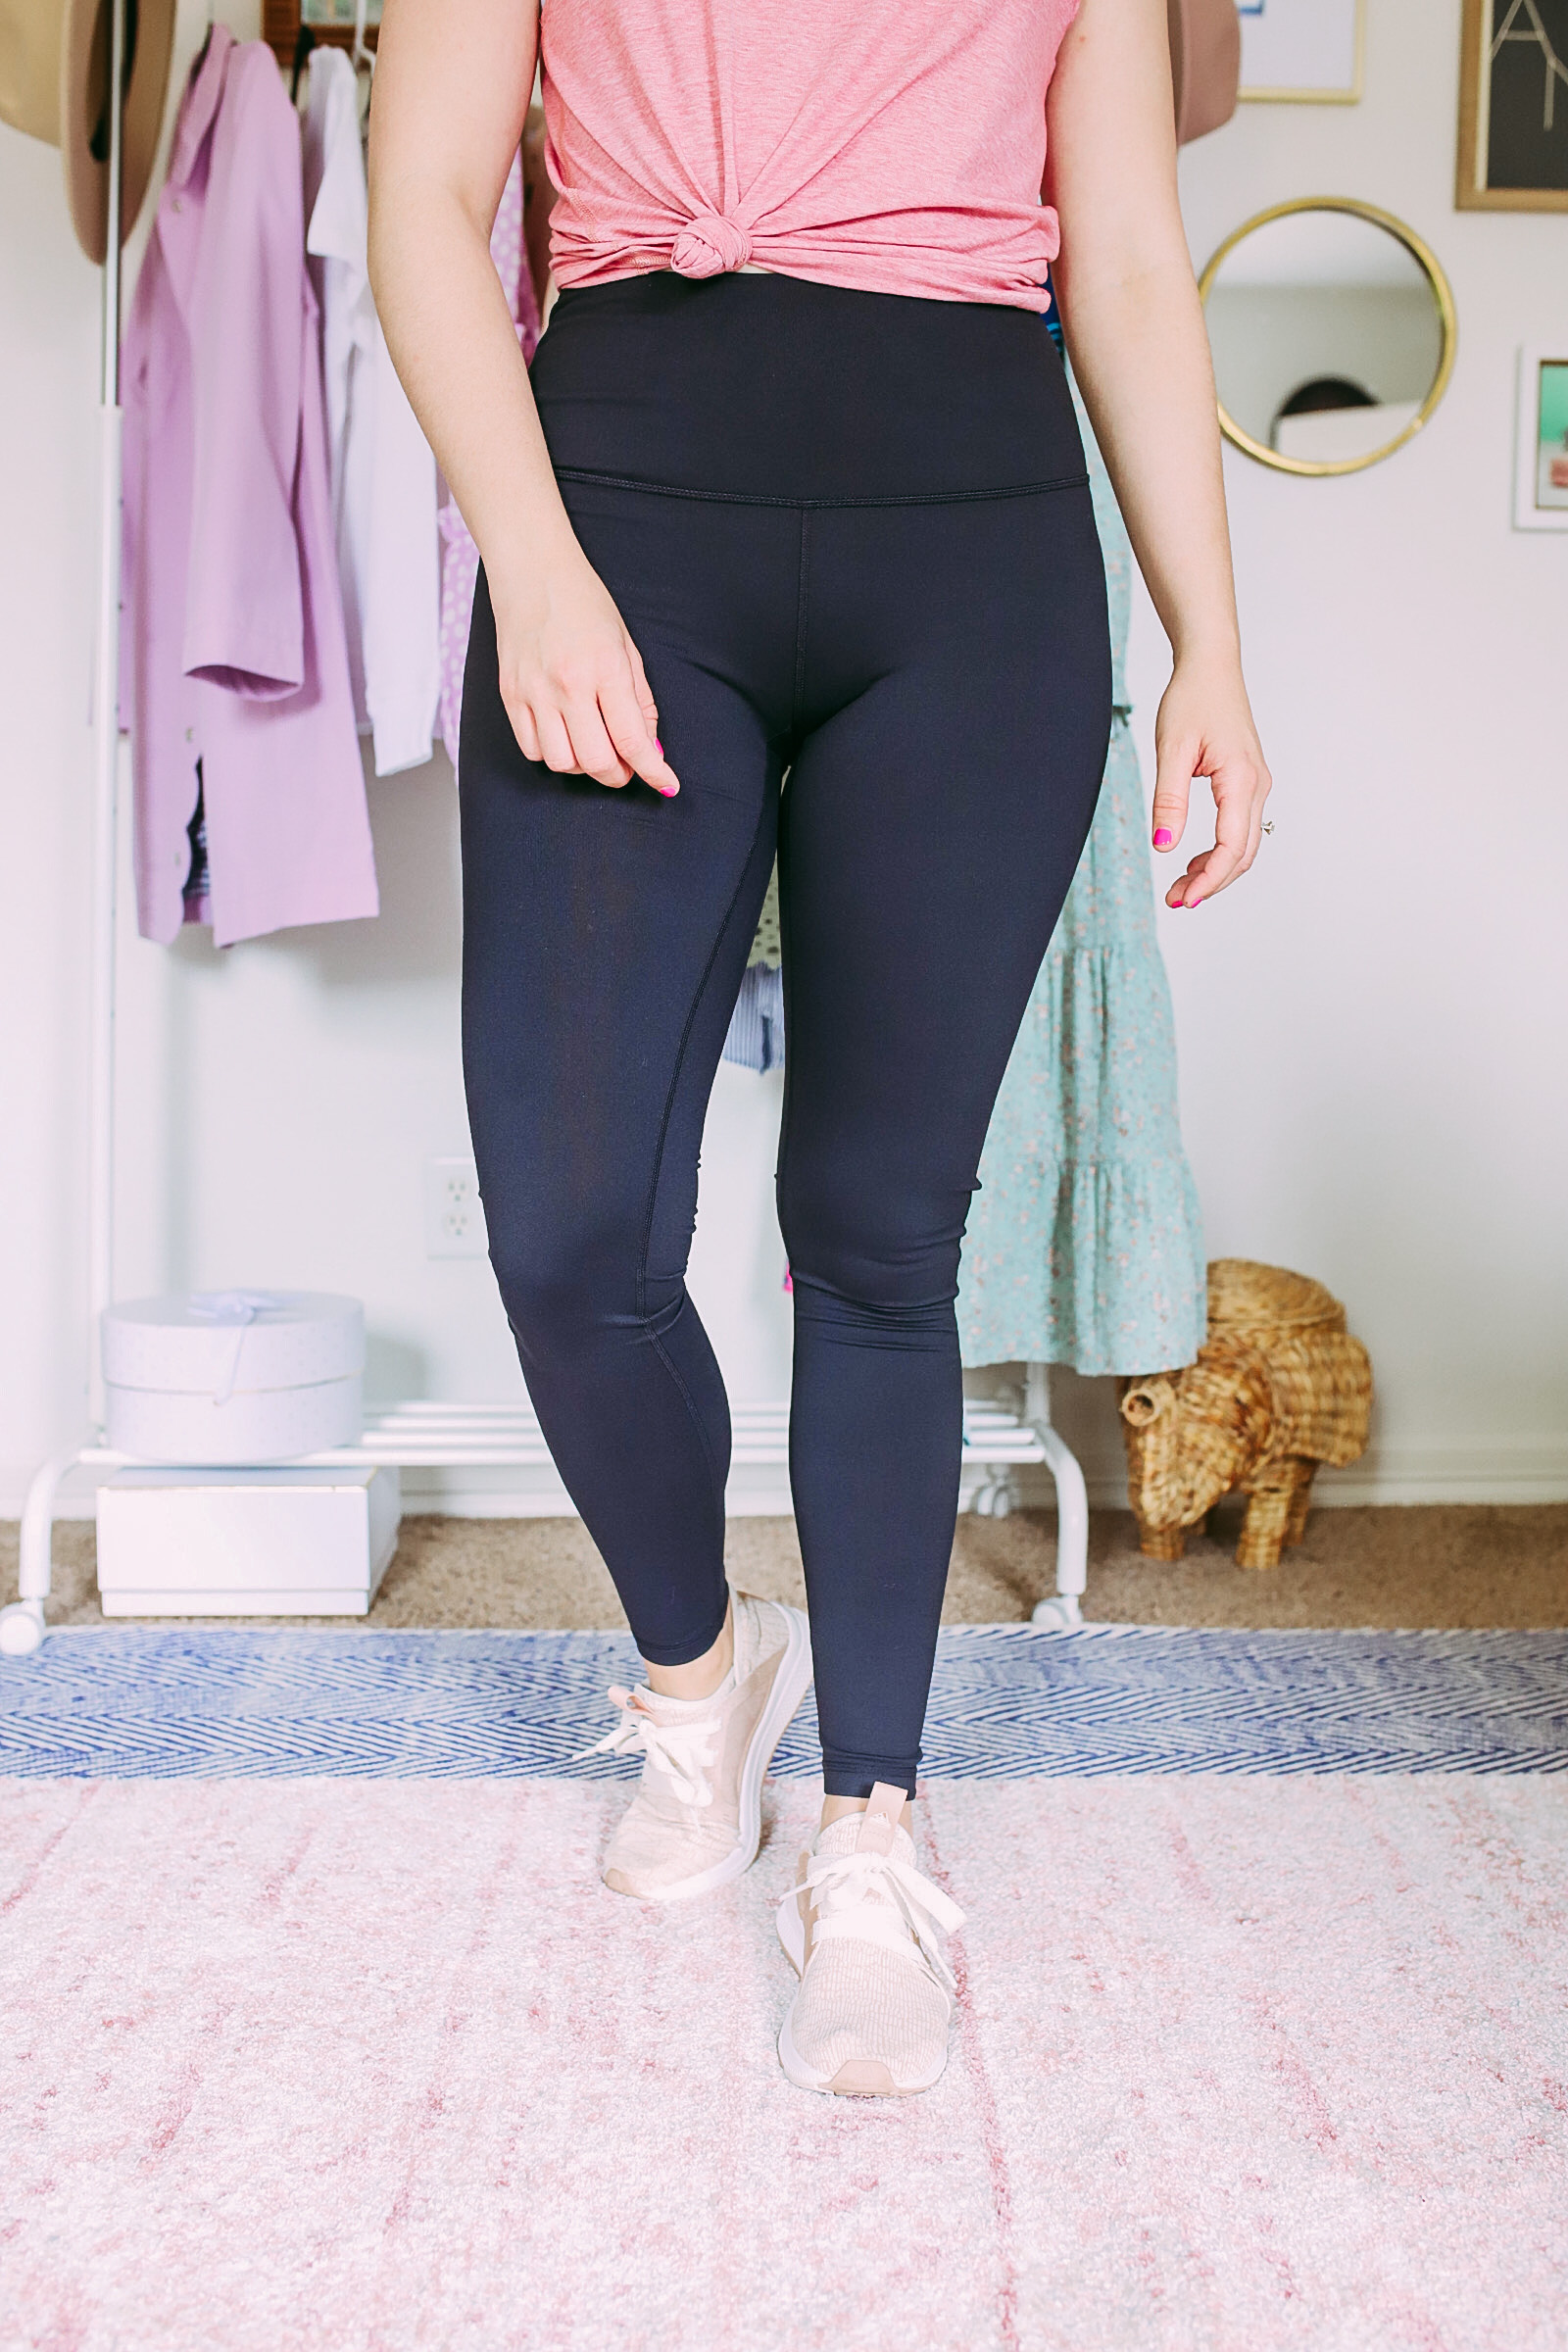 Heyene Yoga Pants with Pockets,High Waist Tummy Control Workout Leggings for Women. 